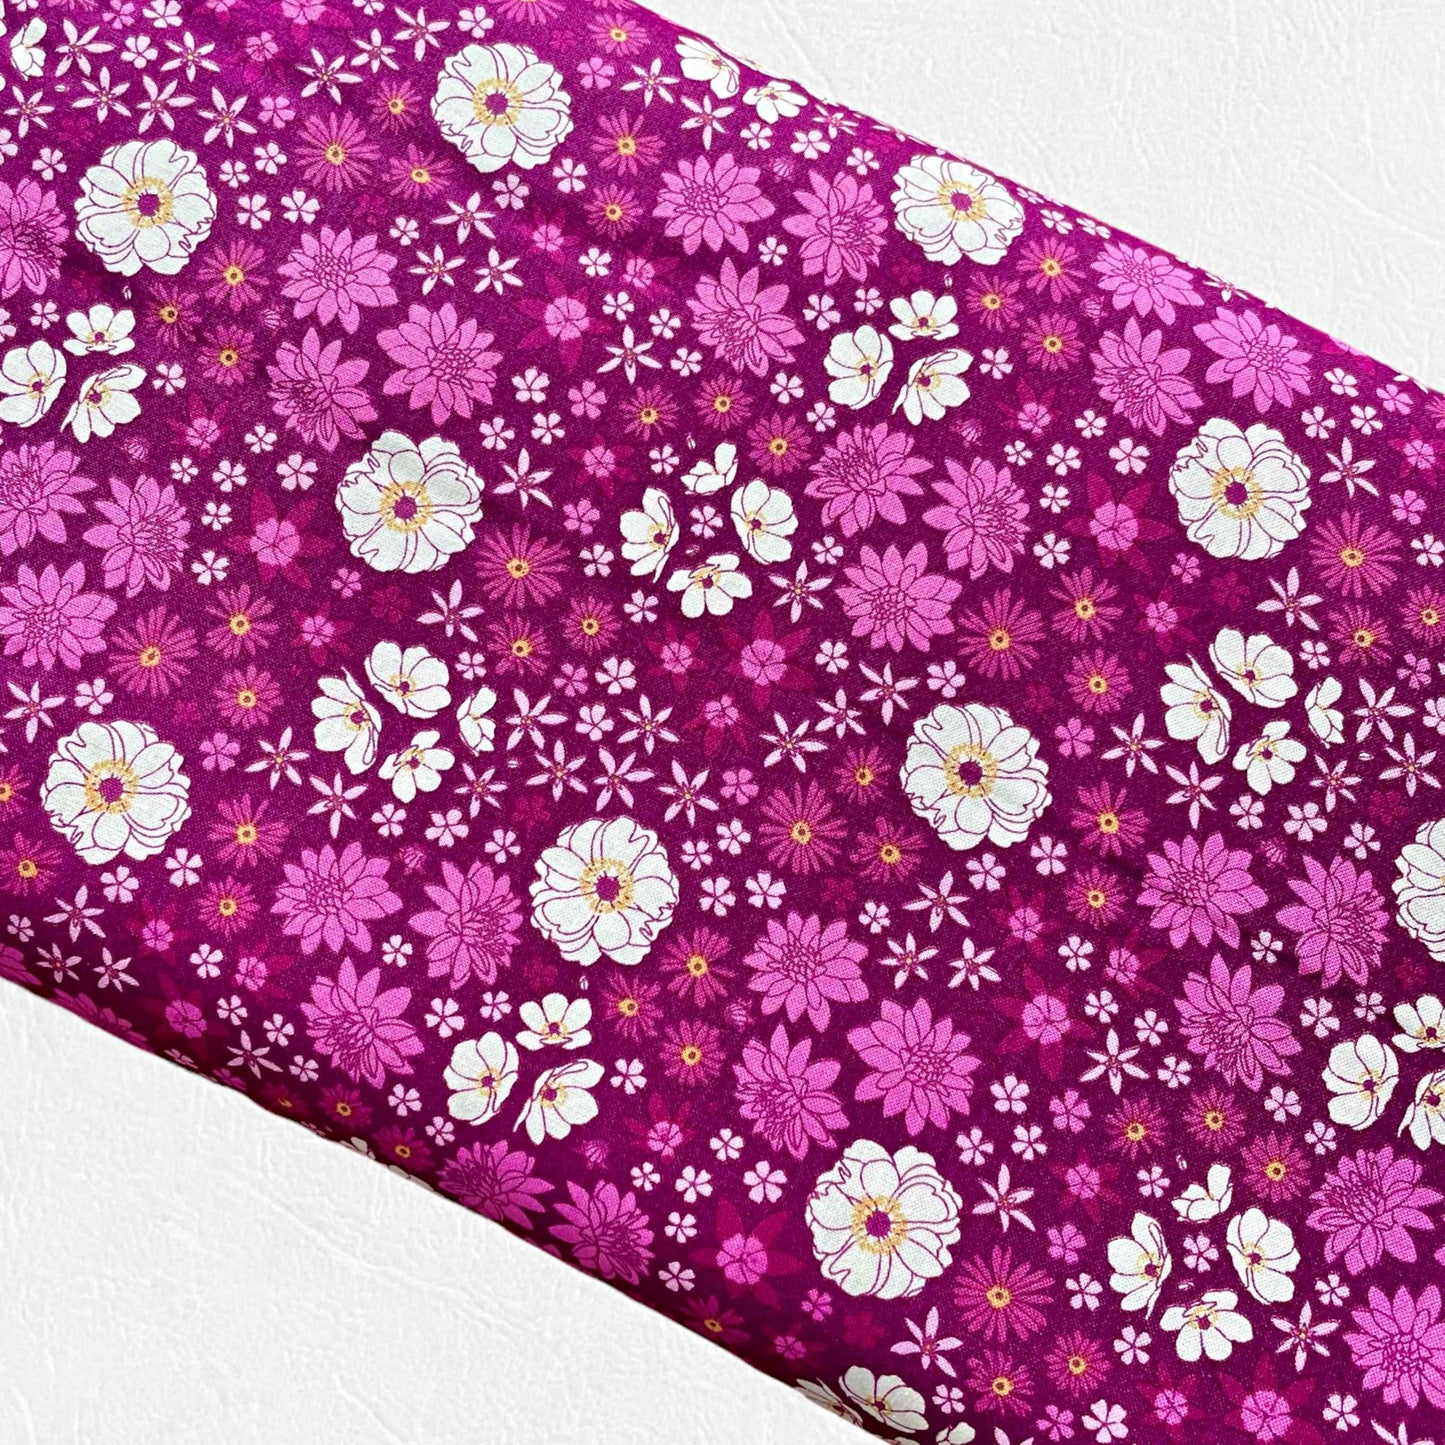 Fabric By The Yard - Scattered Flora - Primavera Collection - Magneta Multi - Pippa Shaw - 90317-80 - Figo Fabrics